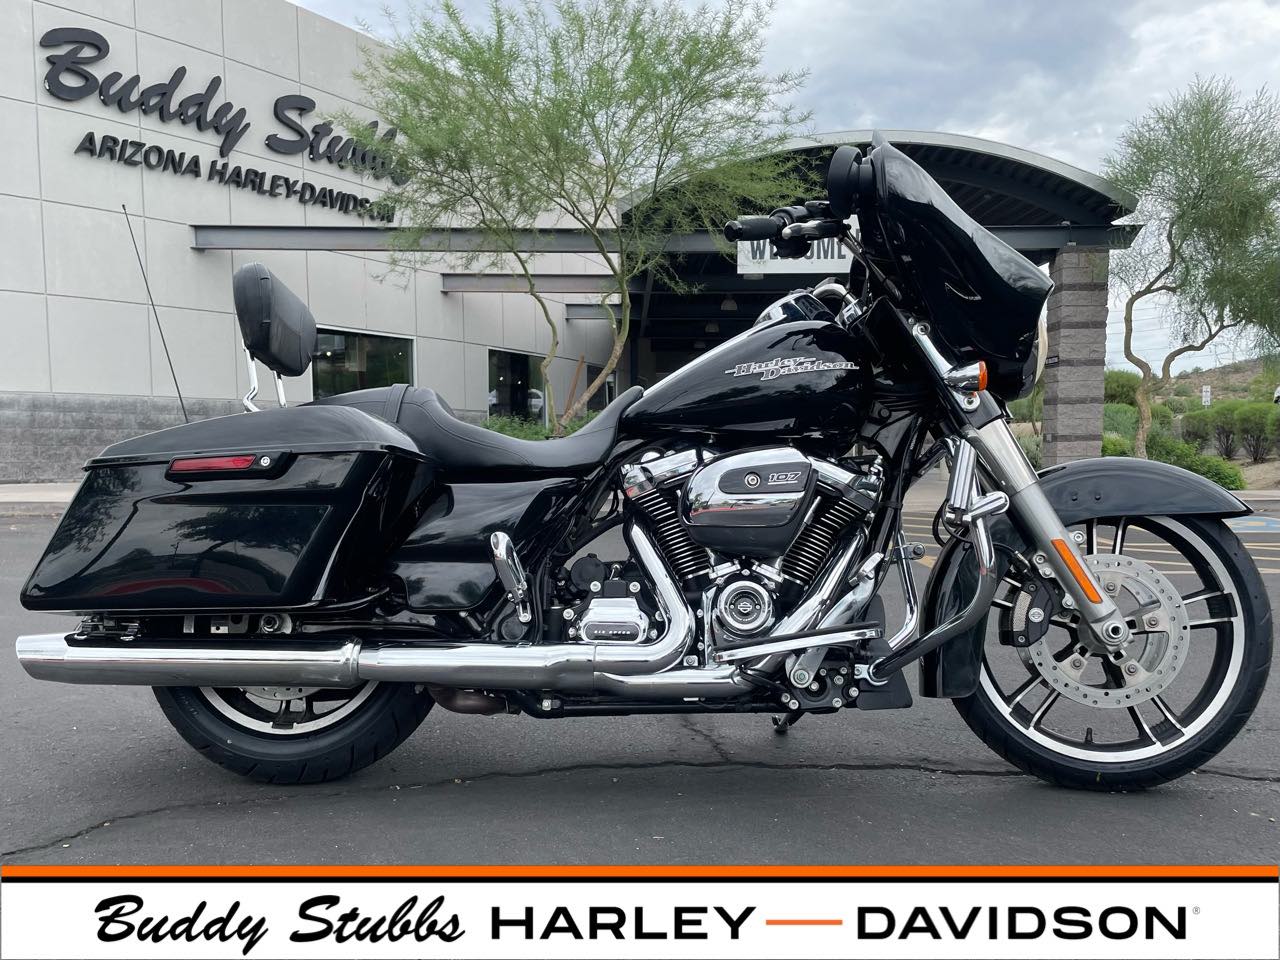 2017 Harley-Davidson Street Glide Special at Buddy Stubbs Arizona Harley-Davidson